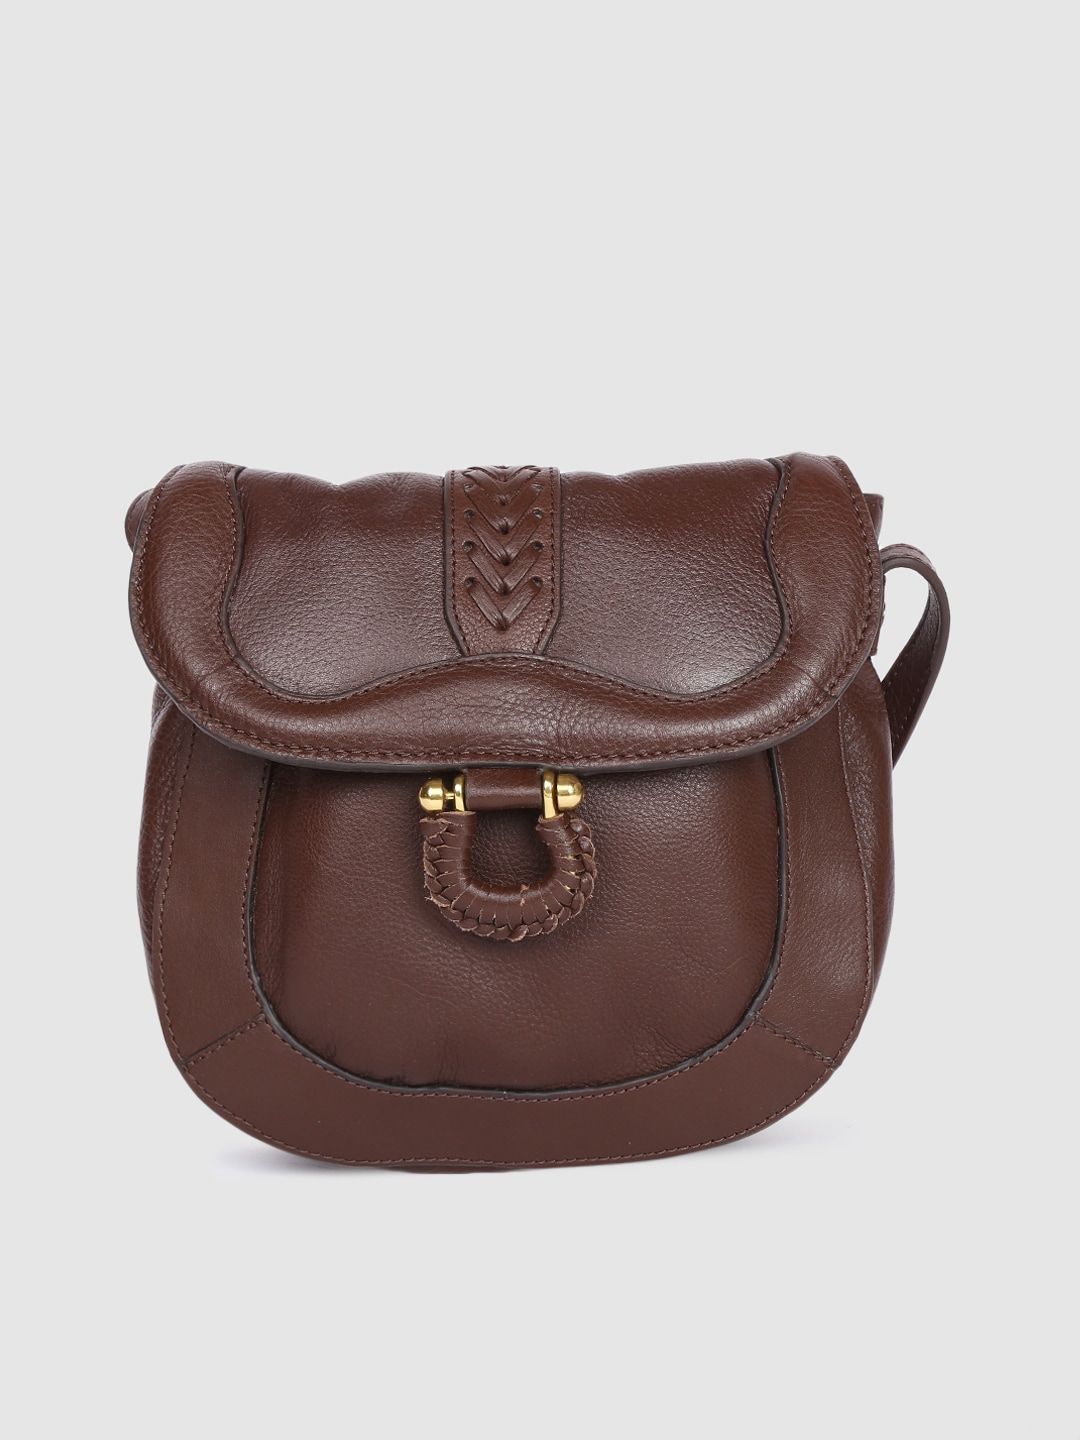 Hidesign Brown Solid Sling Bag Price in India